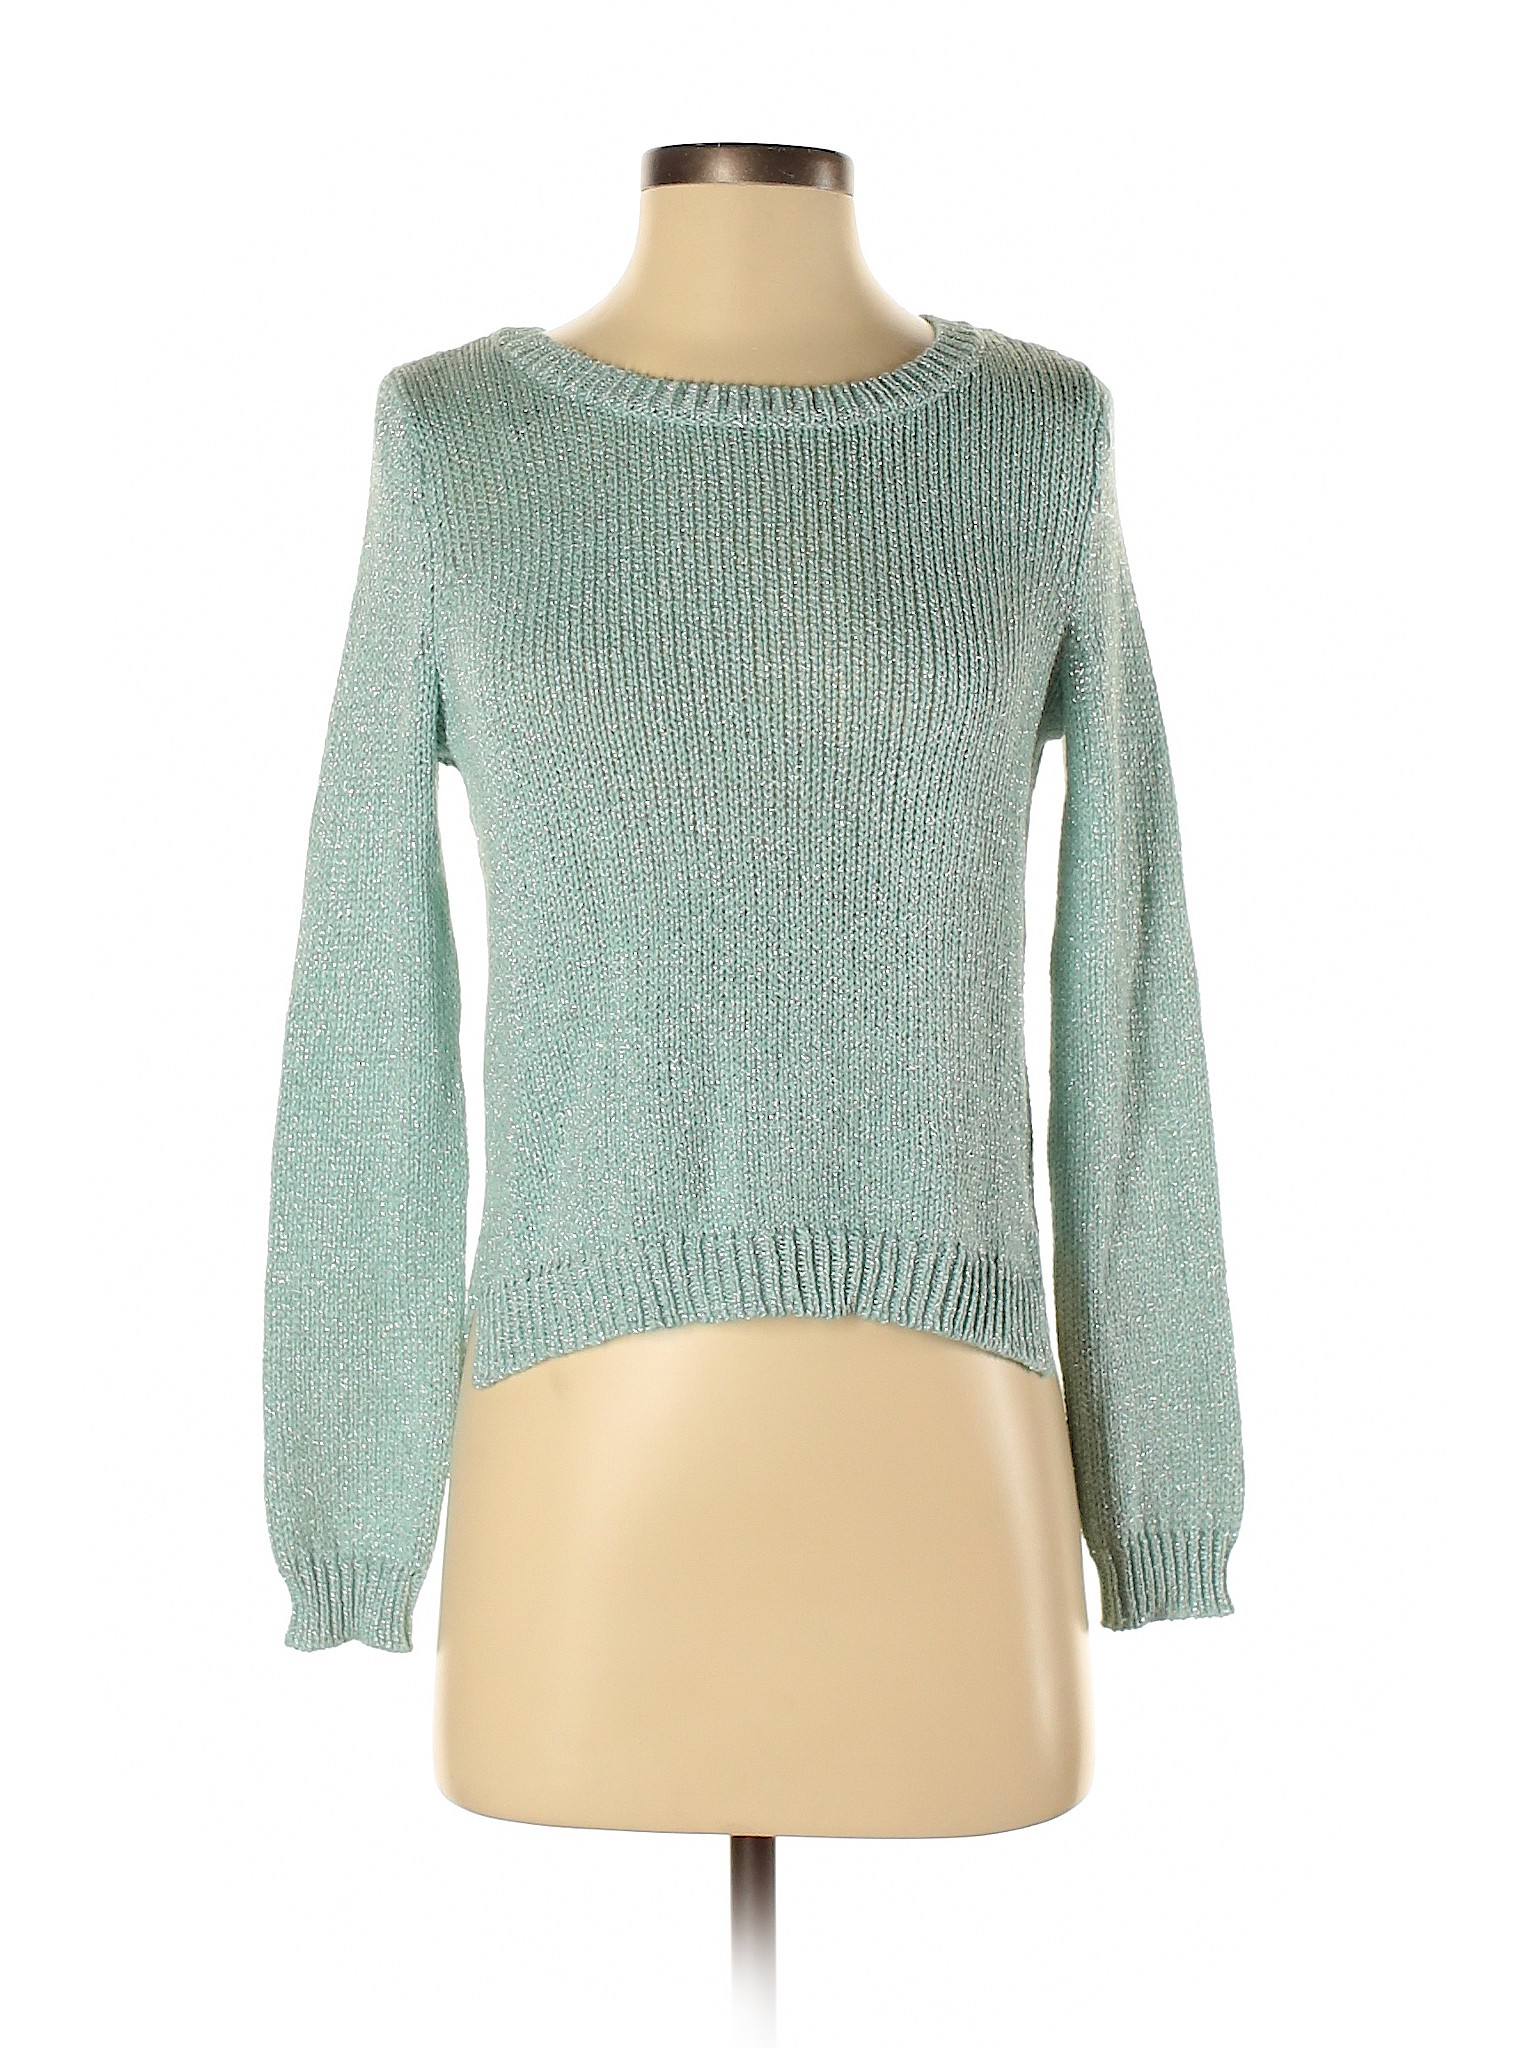 H&M Women Green Pullover Sweater 2 | eBay